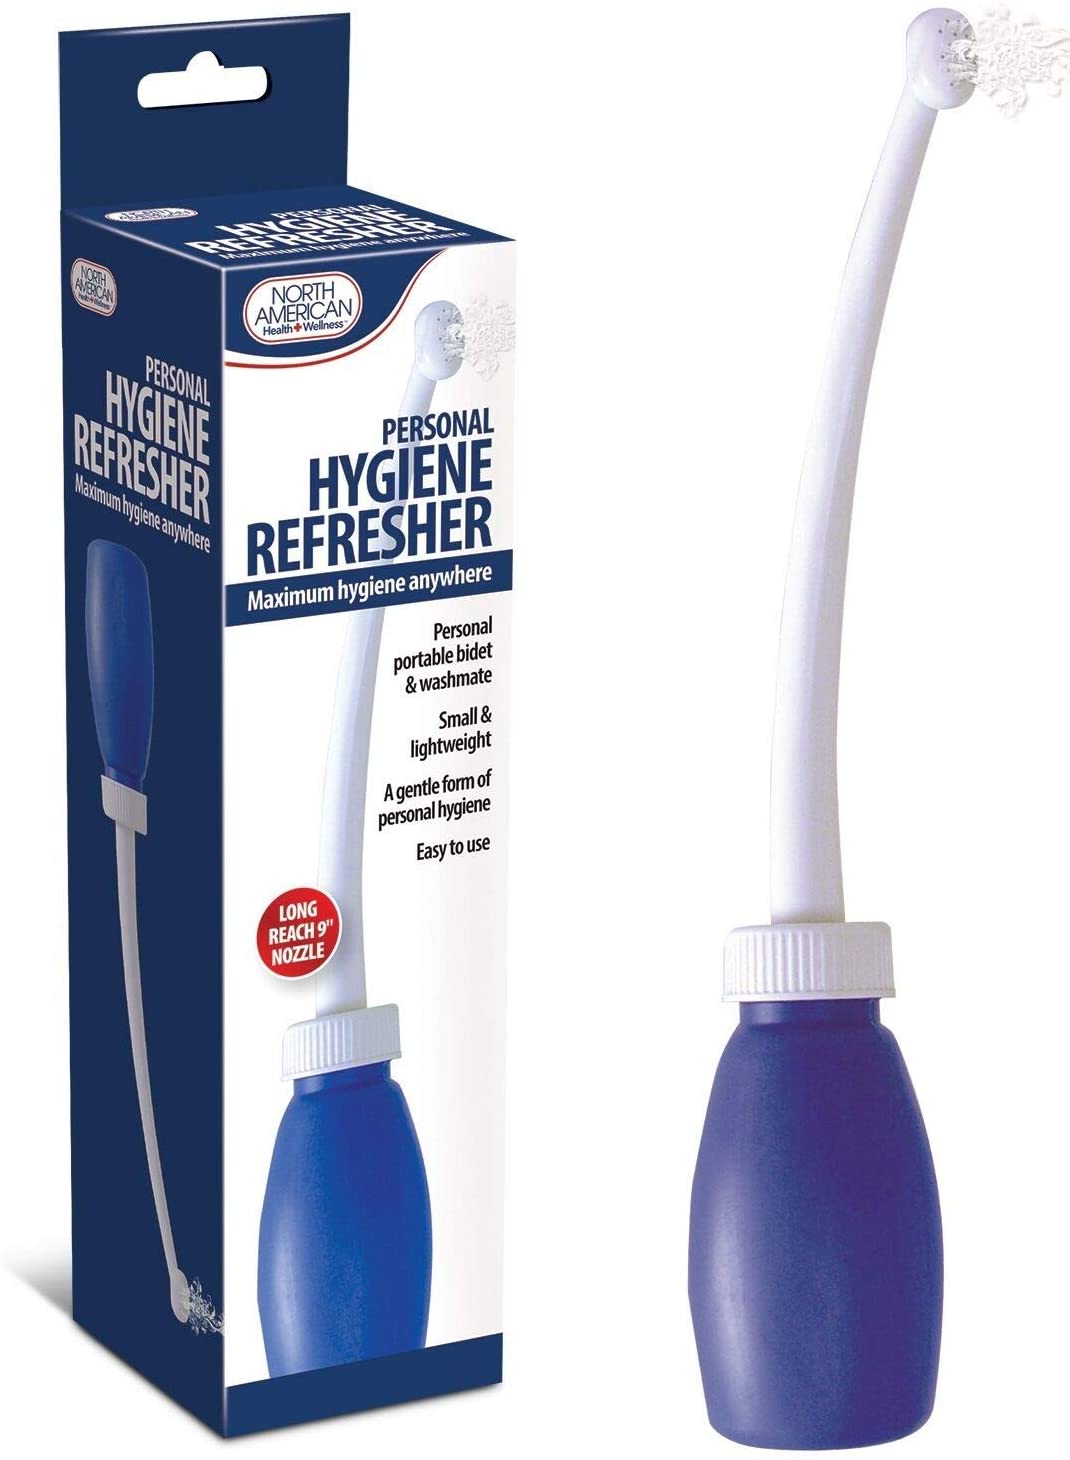 Personal Hygiene Refresher